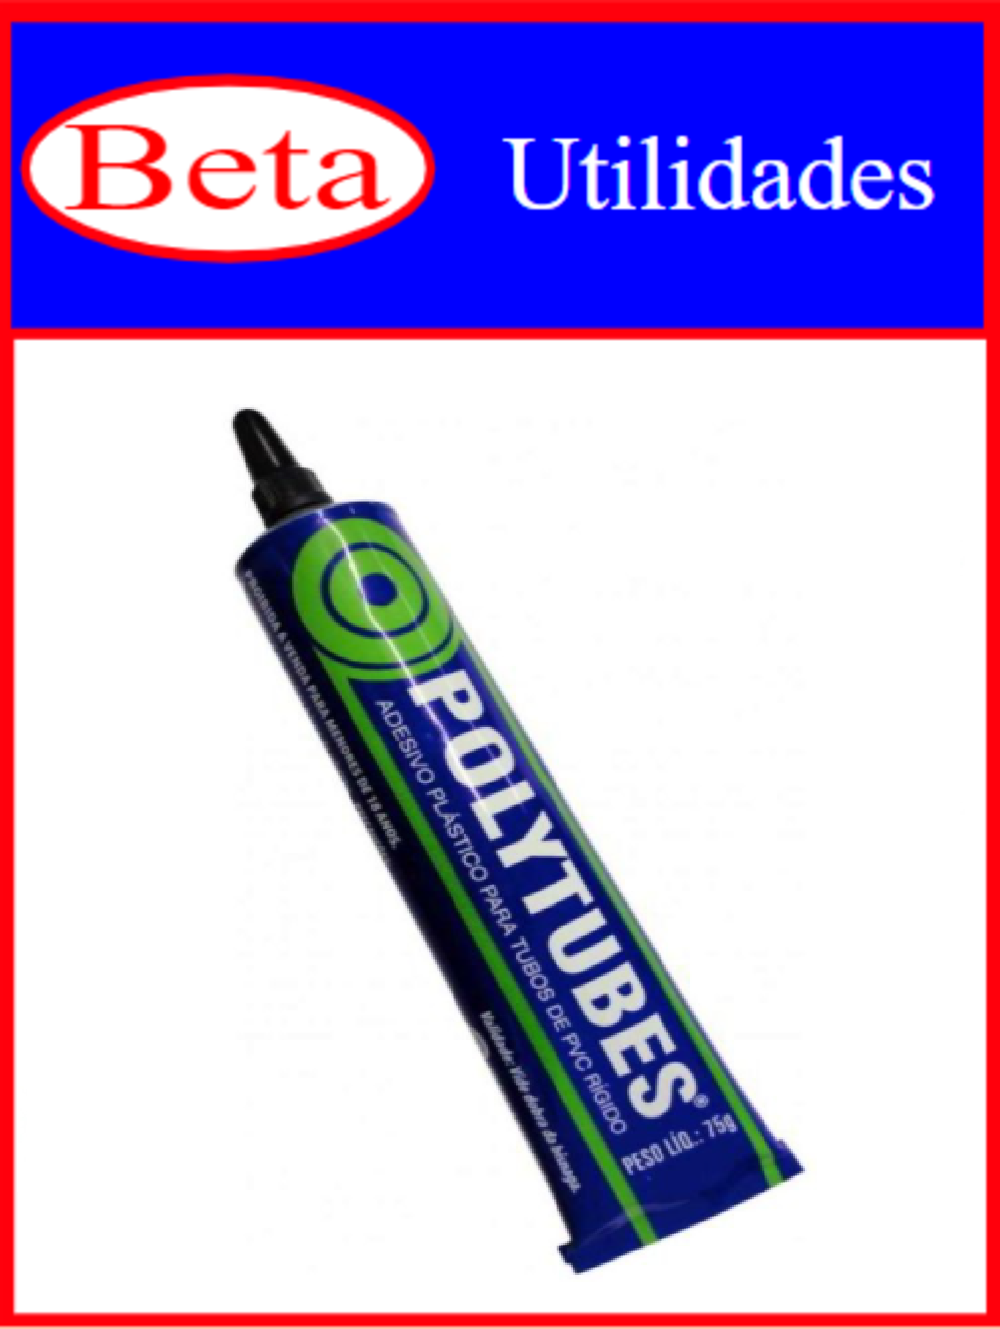 7898021400984 - BETA UTILIDADES COLA P/ PANO PVC